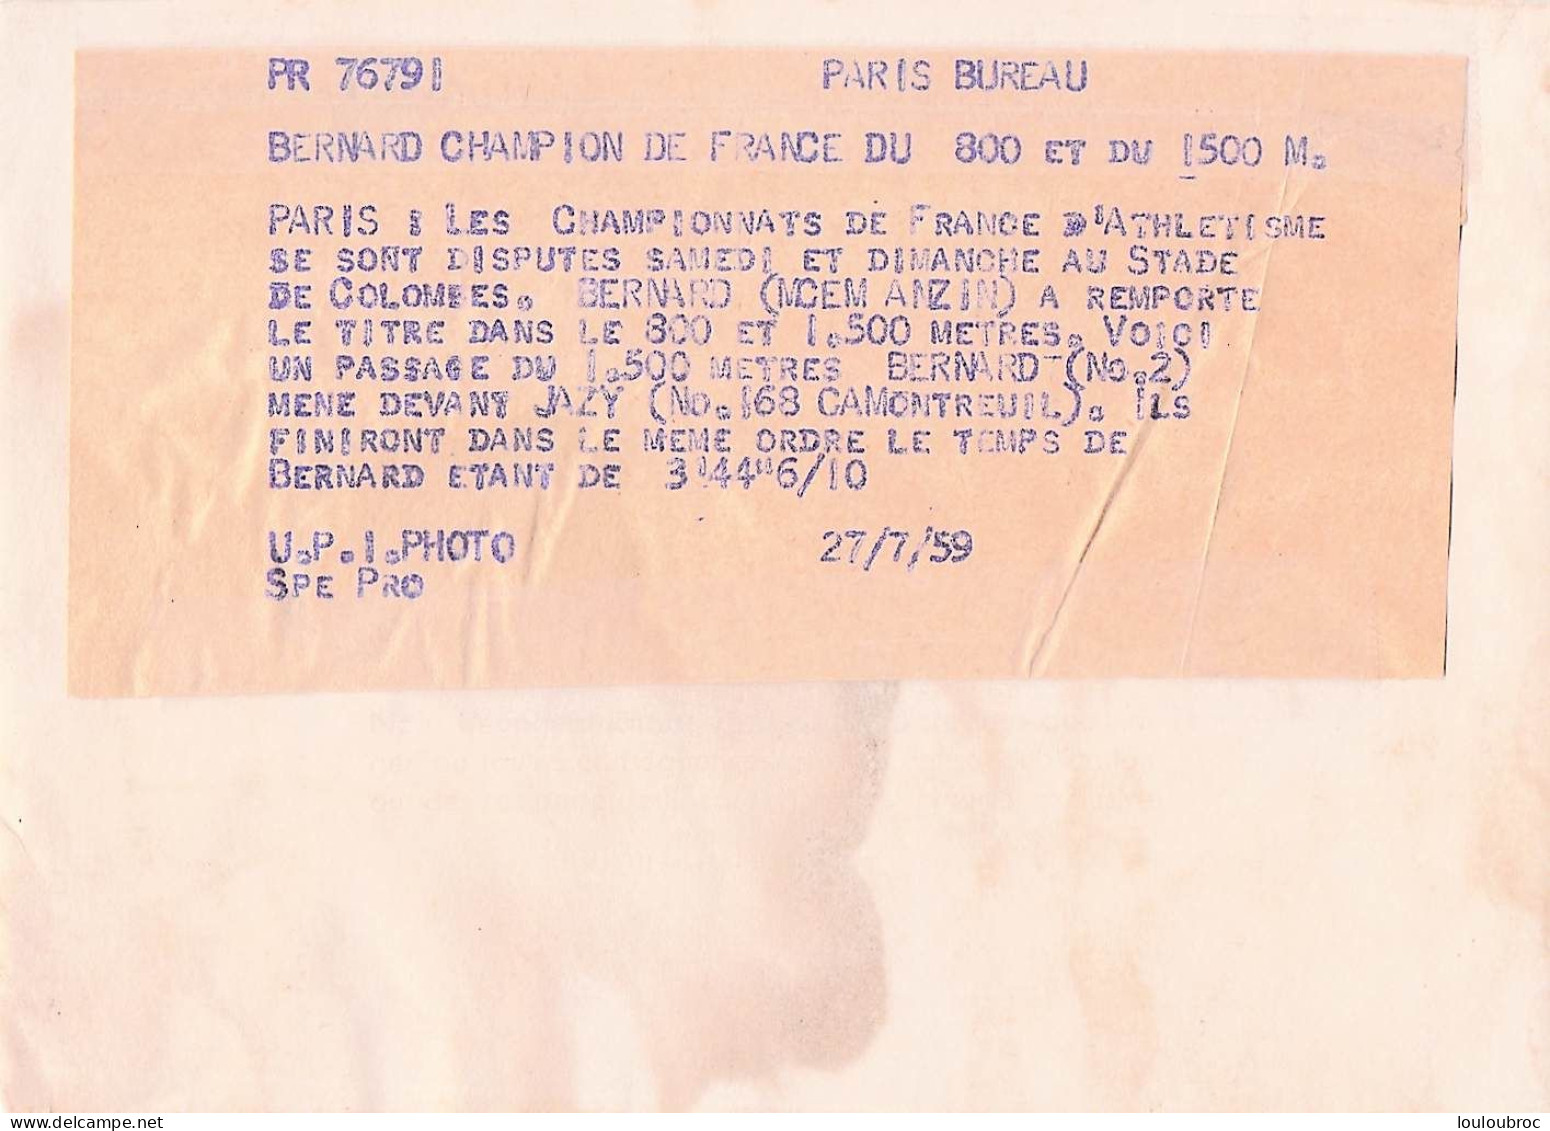 ATHLETISME 07/1959 STADE DE COLOMBES LE 1500M BERNARD DEVANT JAZY PHOTO 18 X 13 CM - Sports